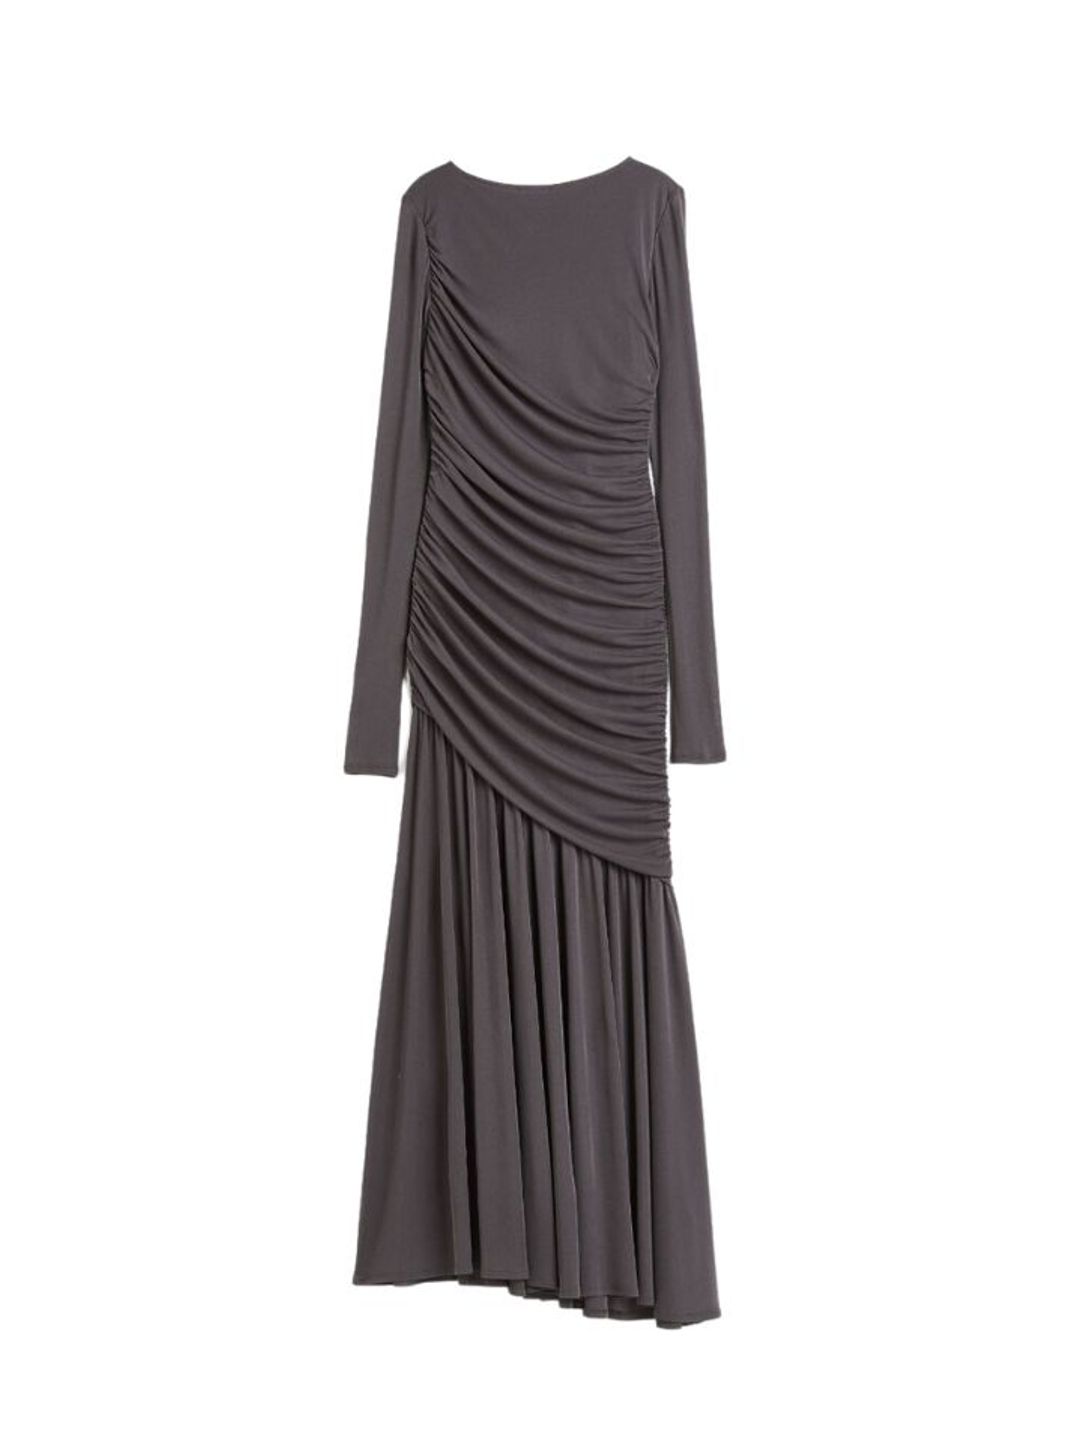 H&M grey ruched maxi dress 